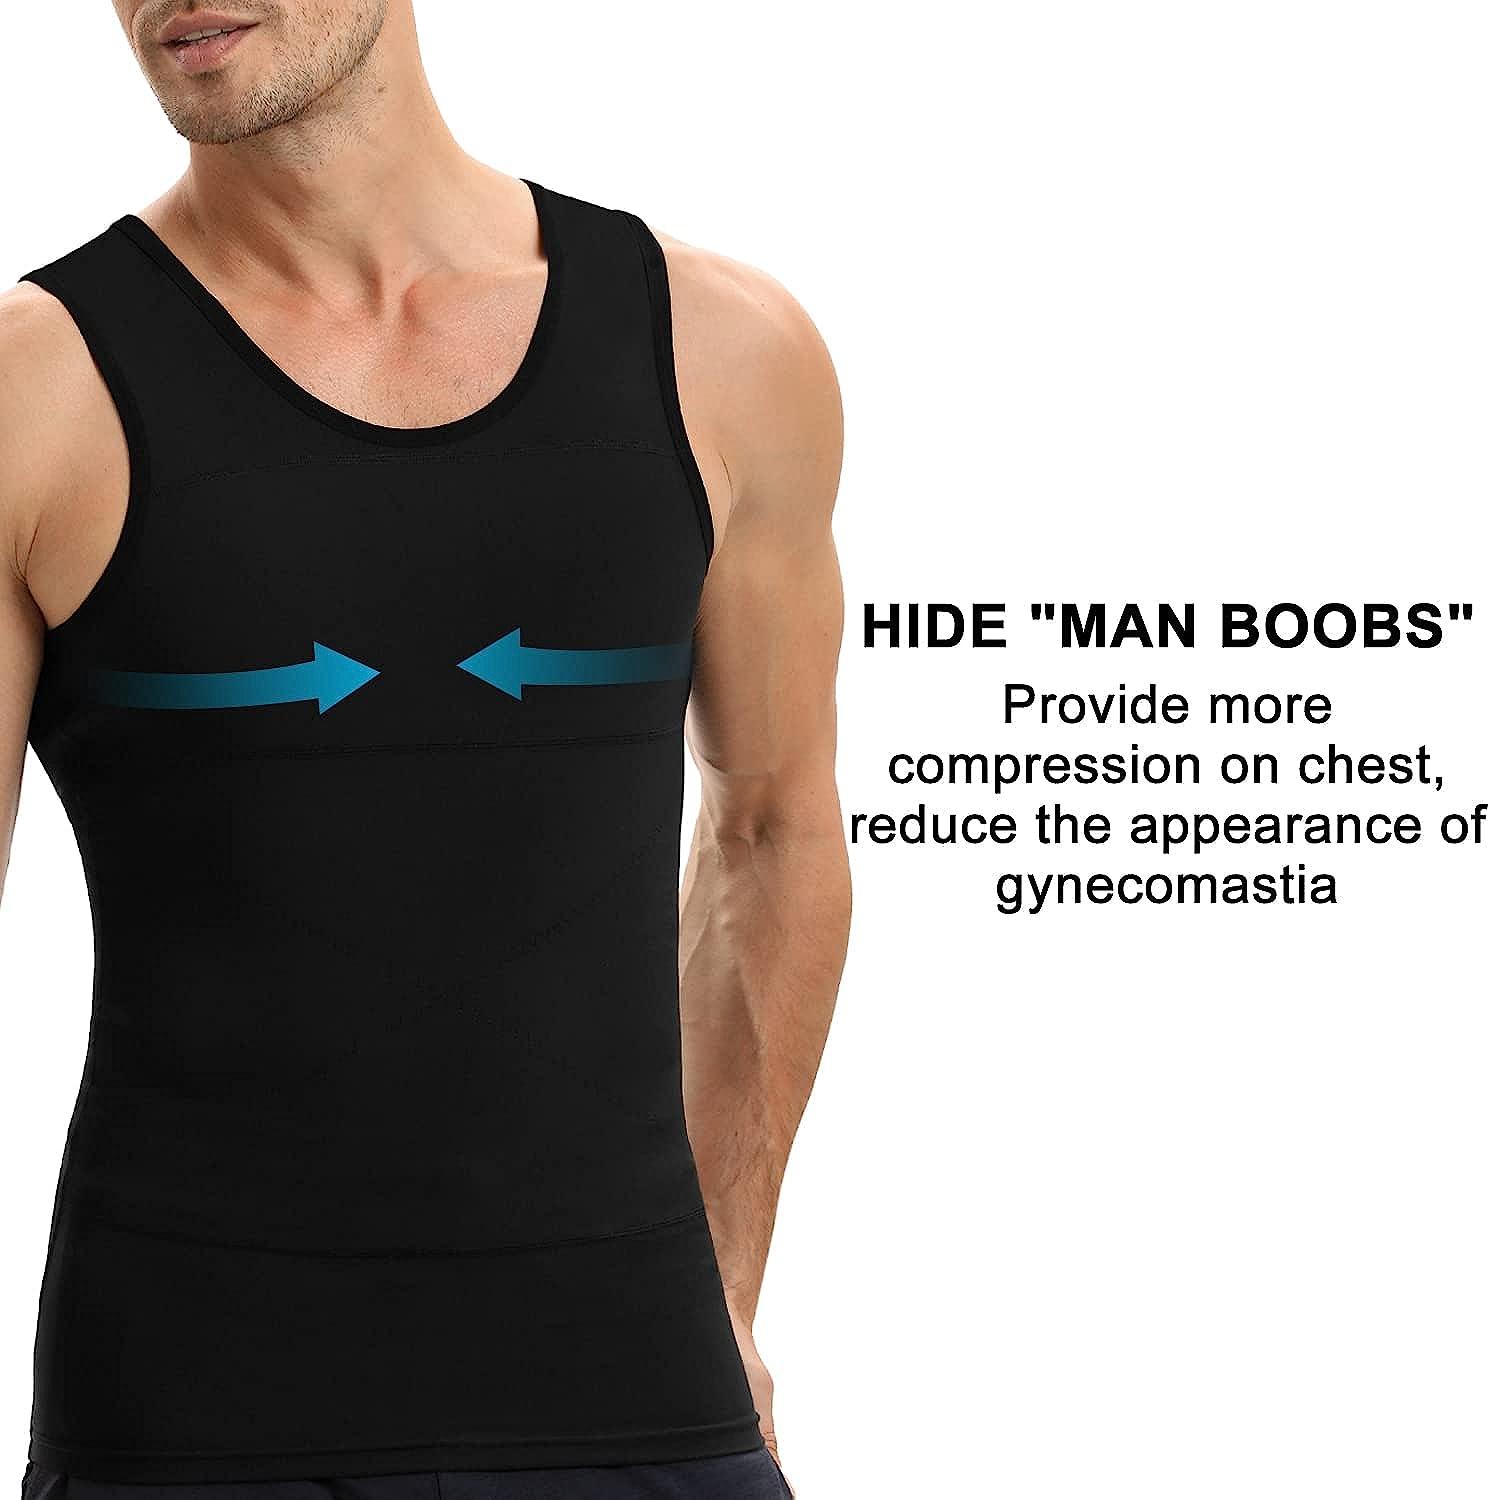 Buy Shaxea Extreme Gynecomastia Compression Shirt to Hide Man